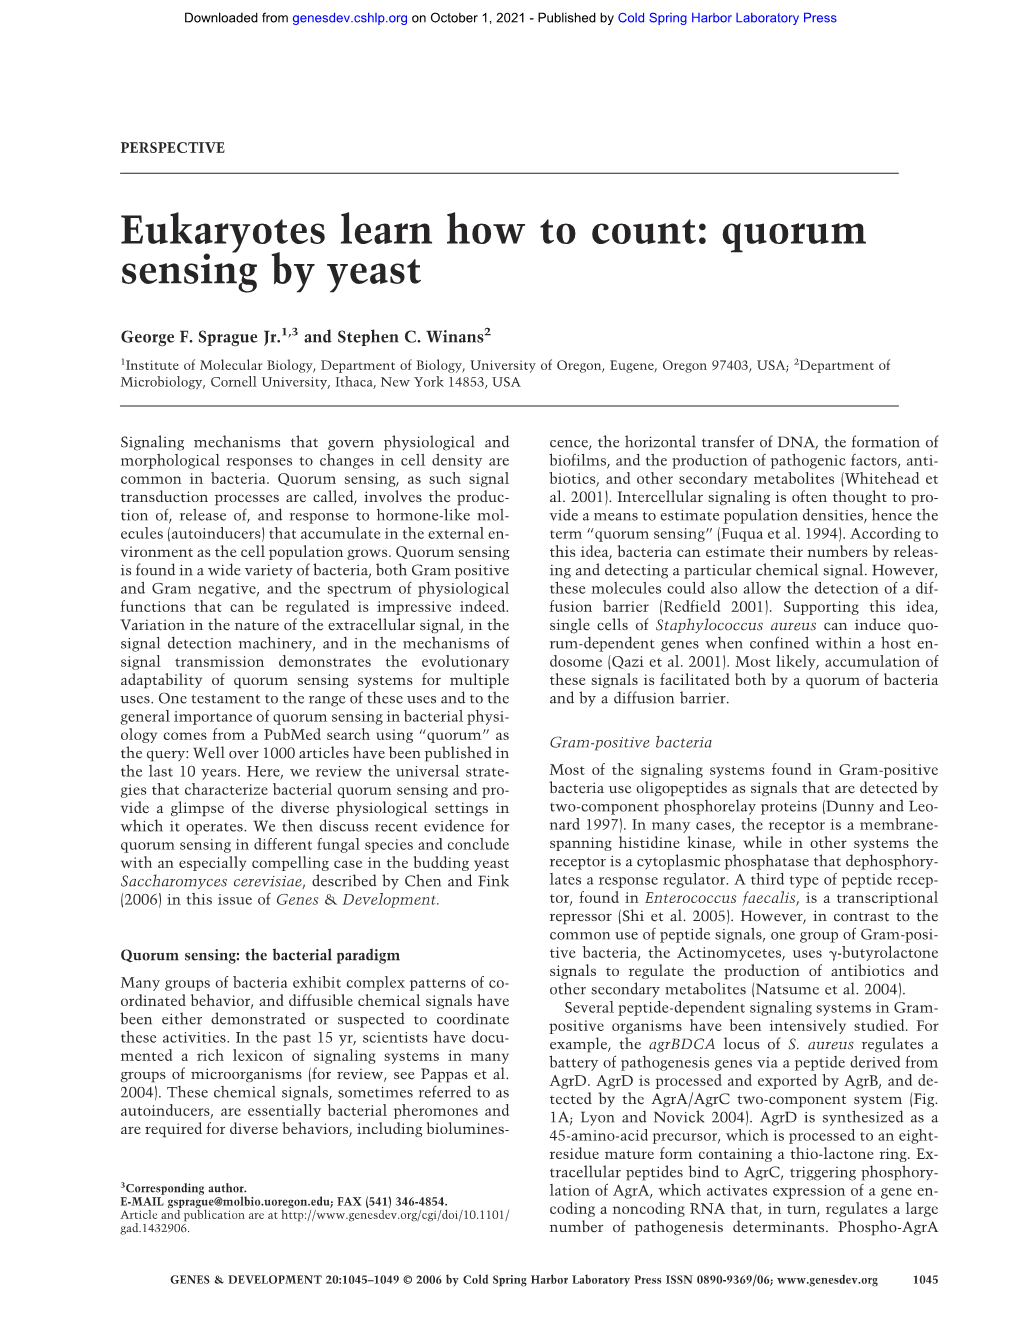 Quorum Sensing by Yeast